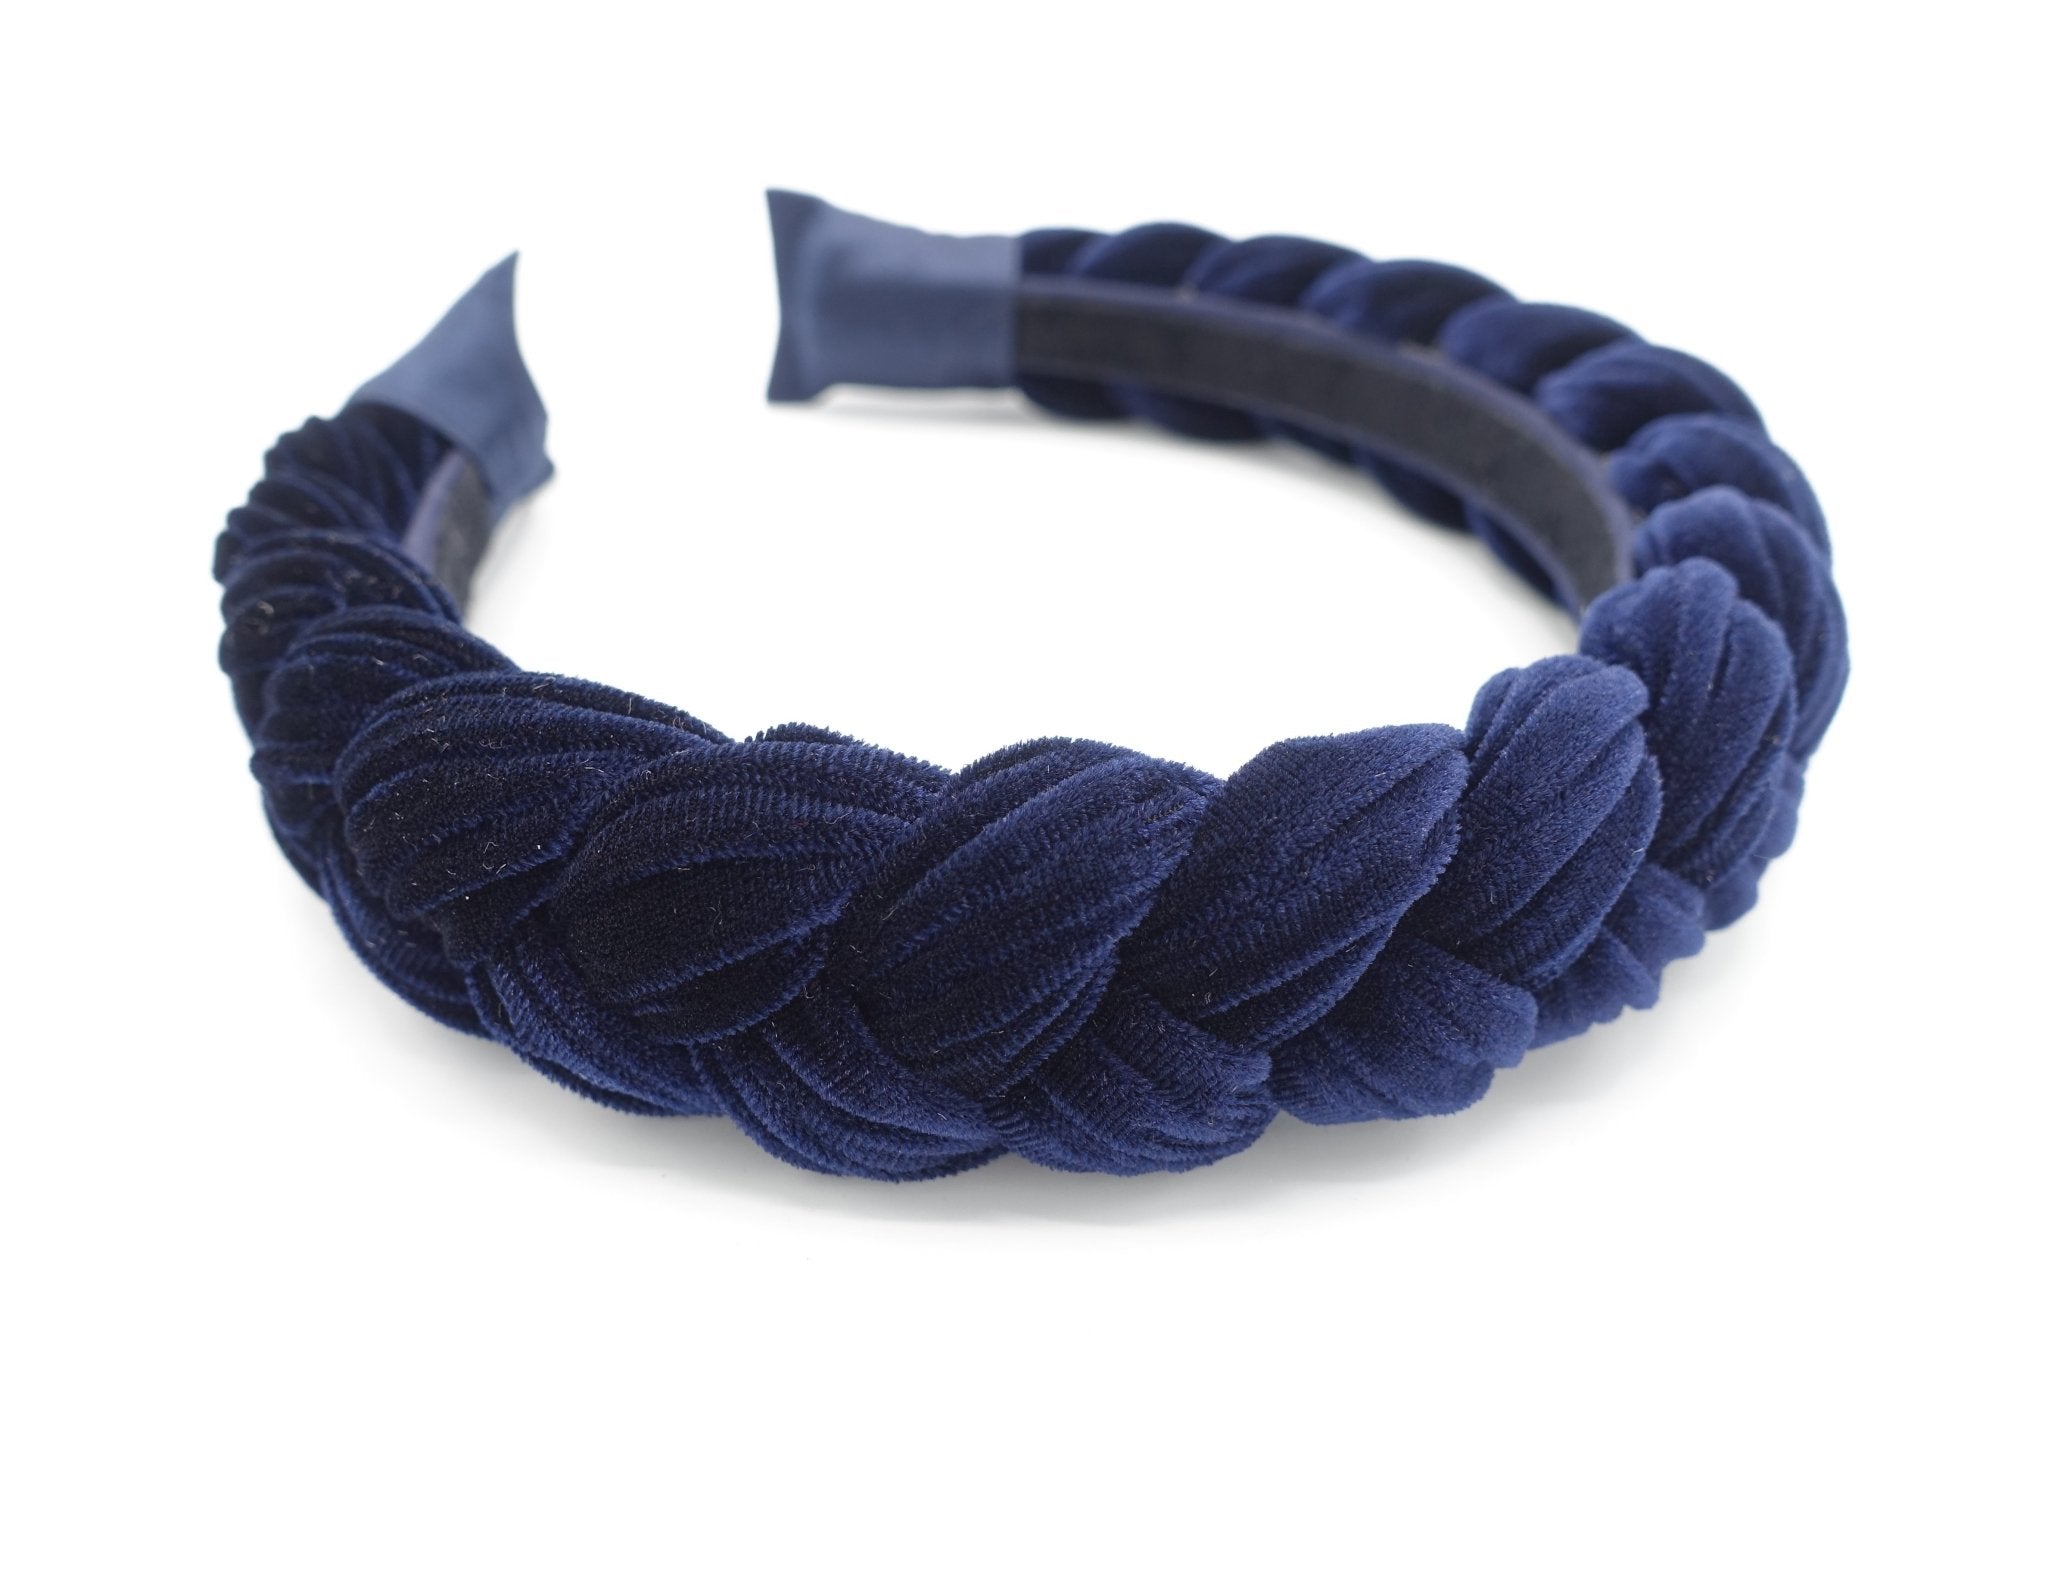 veryshine.com Headband Navy Brooklyn velvet braided headband women hair accessory